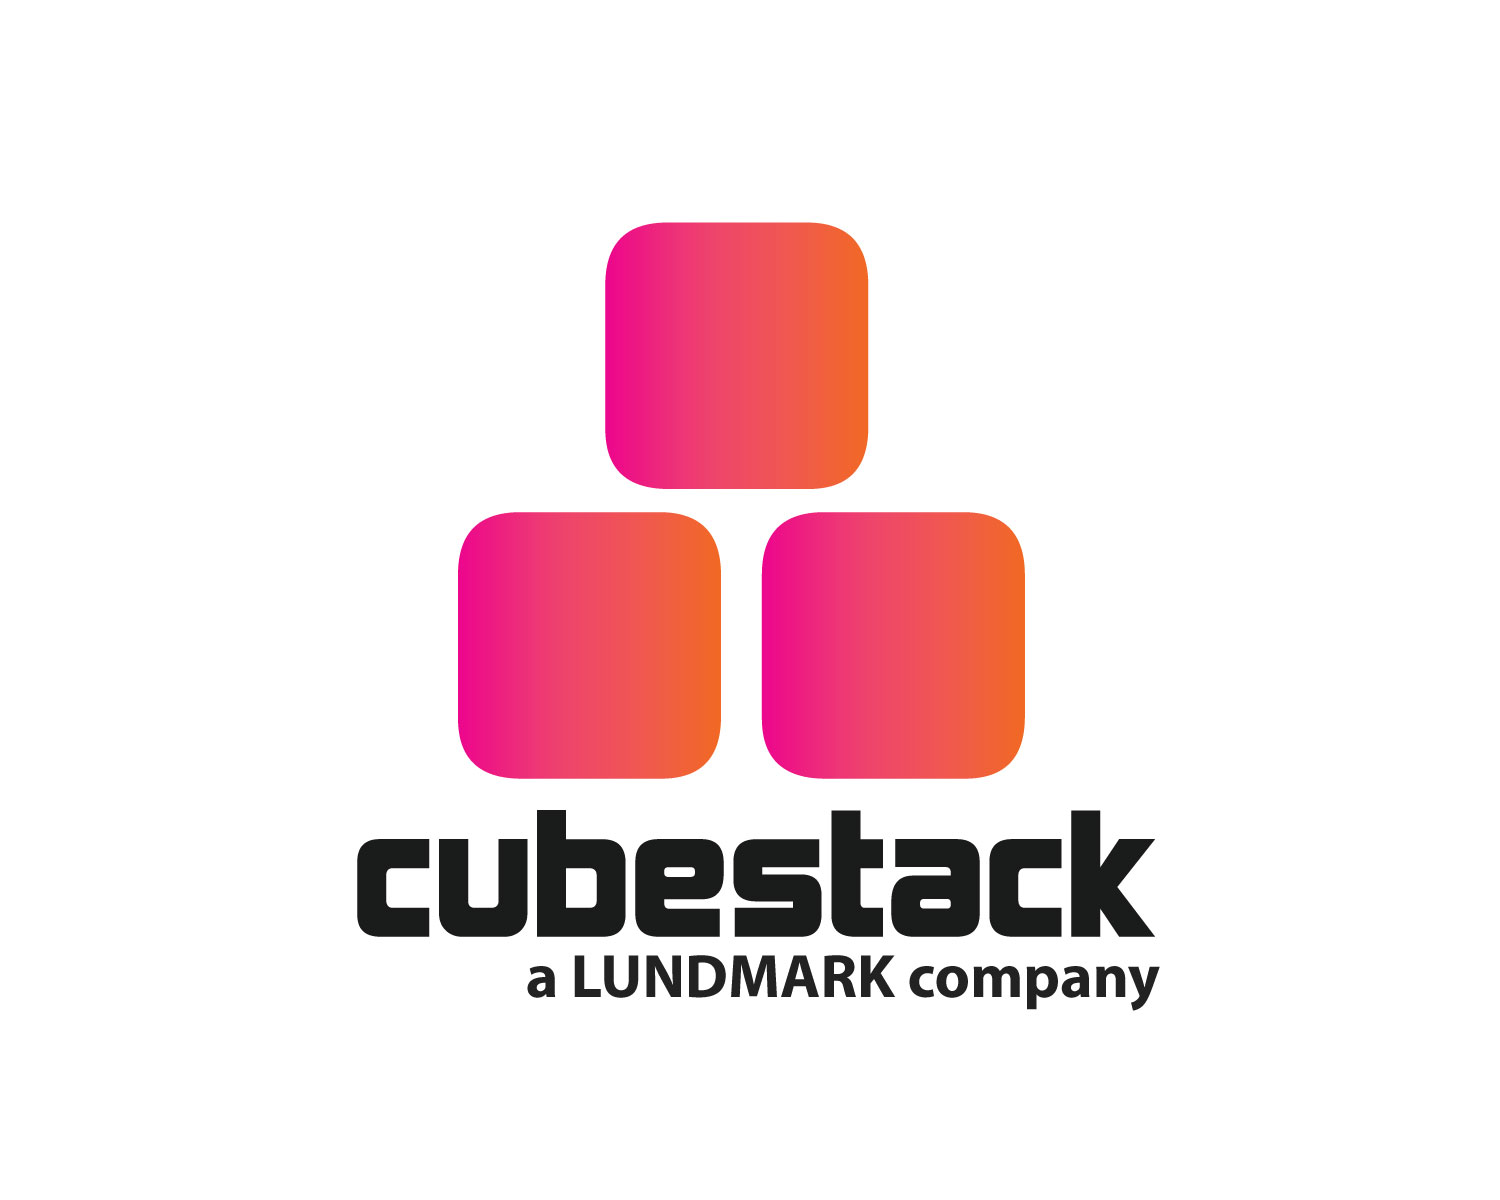 Cubestack